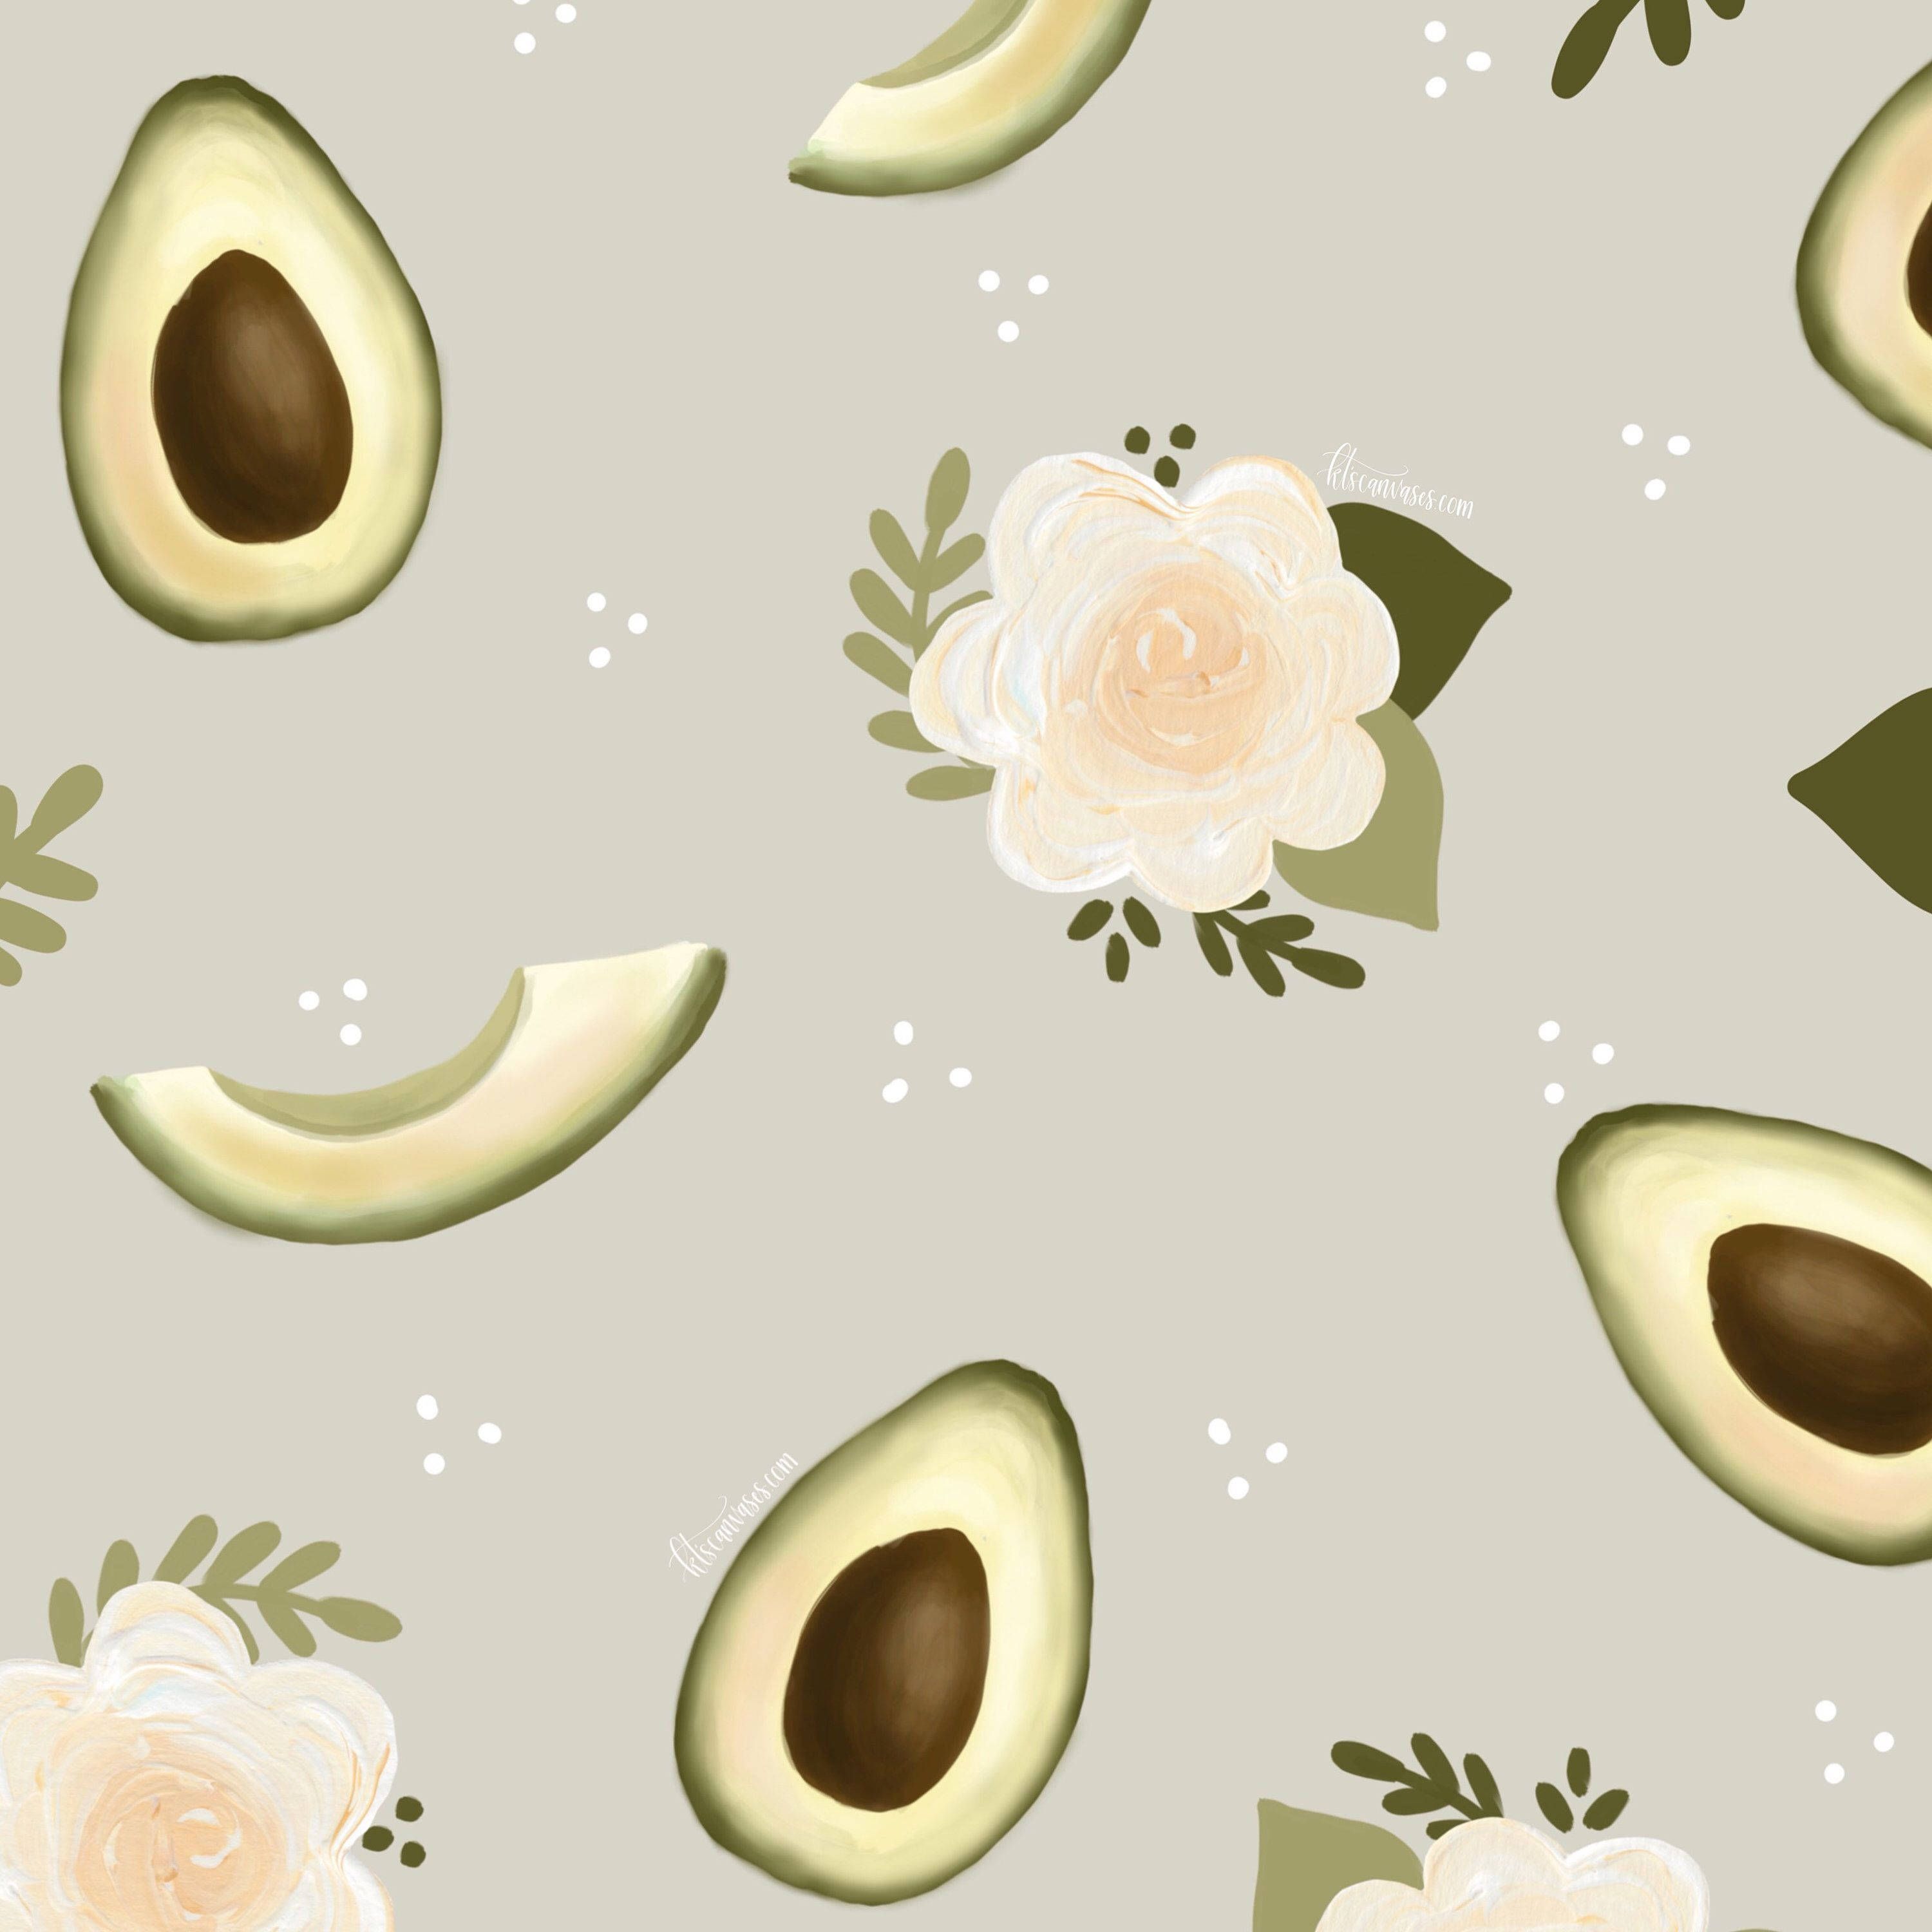 Download Cute Avocado White Flowers Wallpaper